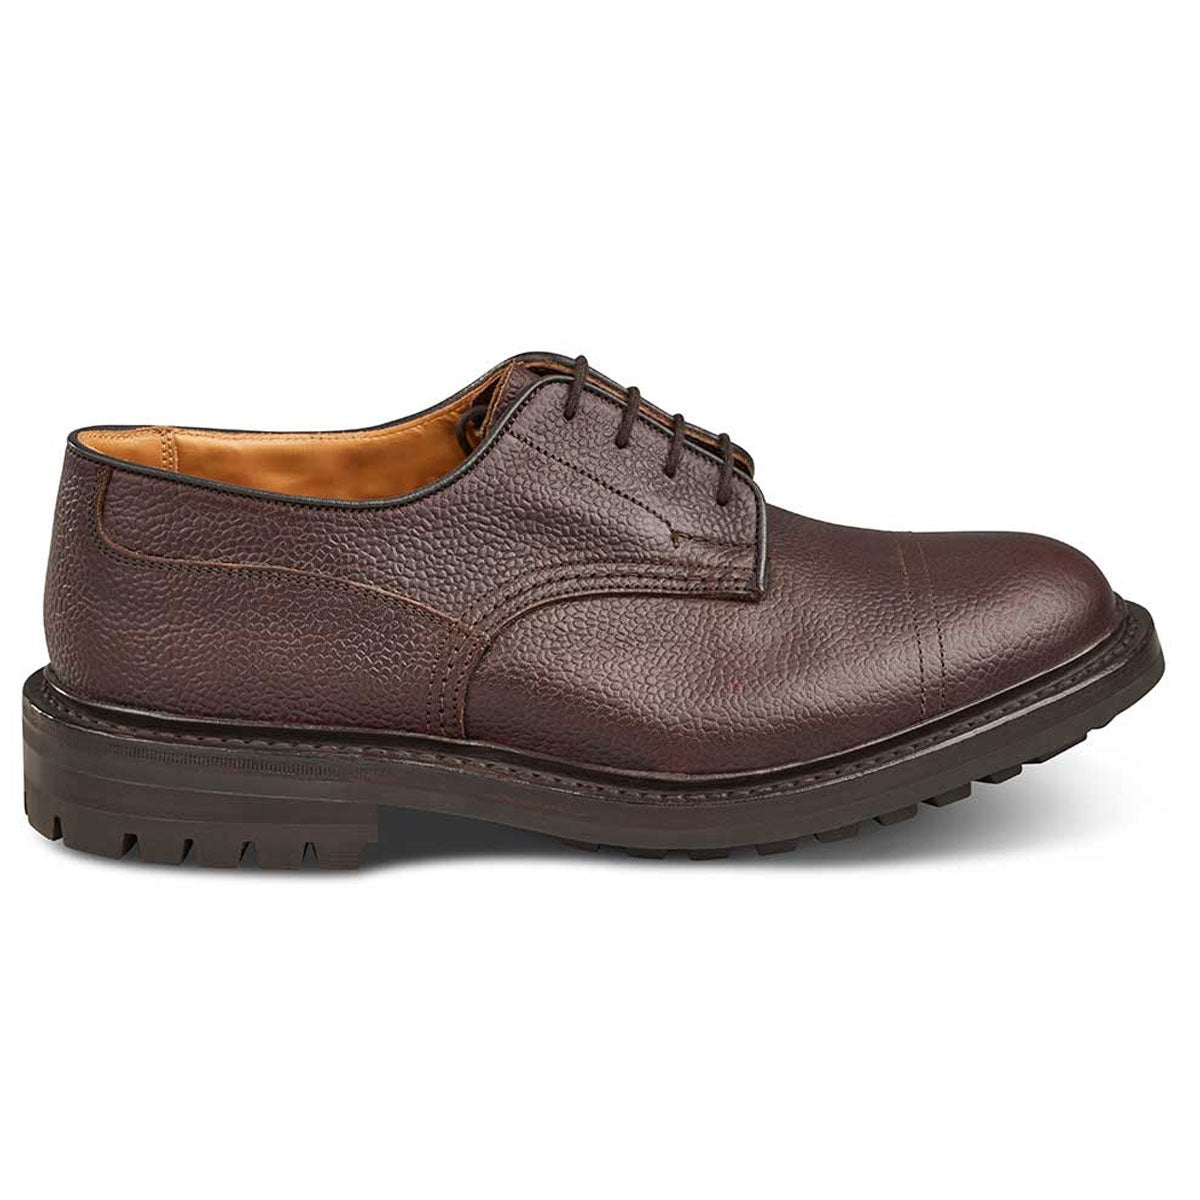 TRICKER'S Matlock Shoes - Mens - Brown Zug Grain